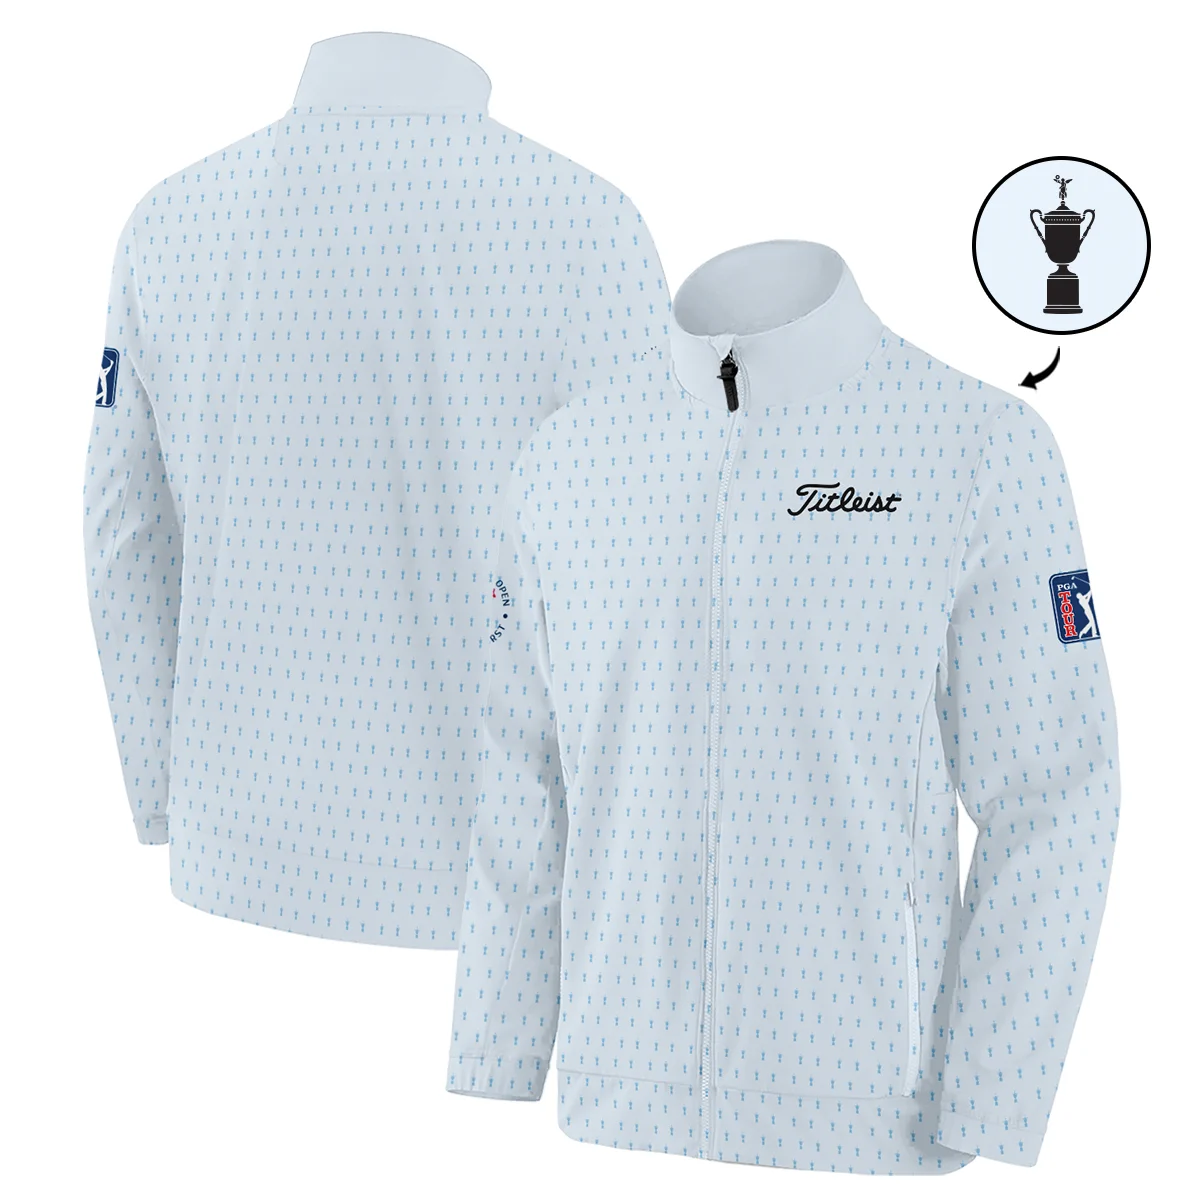 124th U.S. Open Pinehurst Titleist Hoodie Shirt Sports Pattern Cup Color Light Blue All Over Print Hoodie Shirt